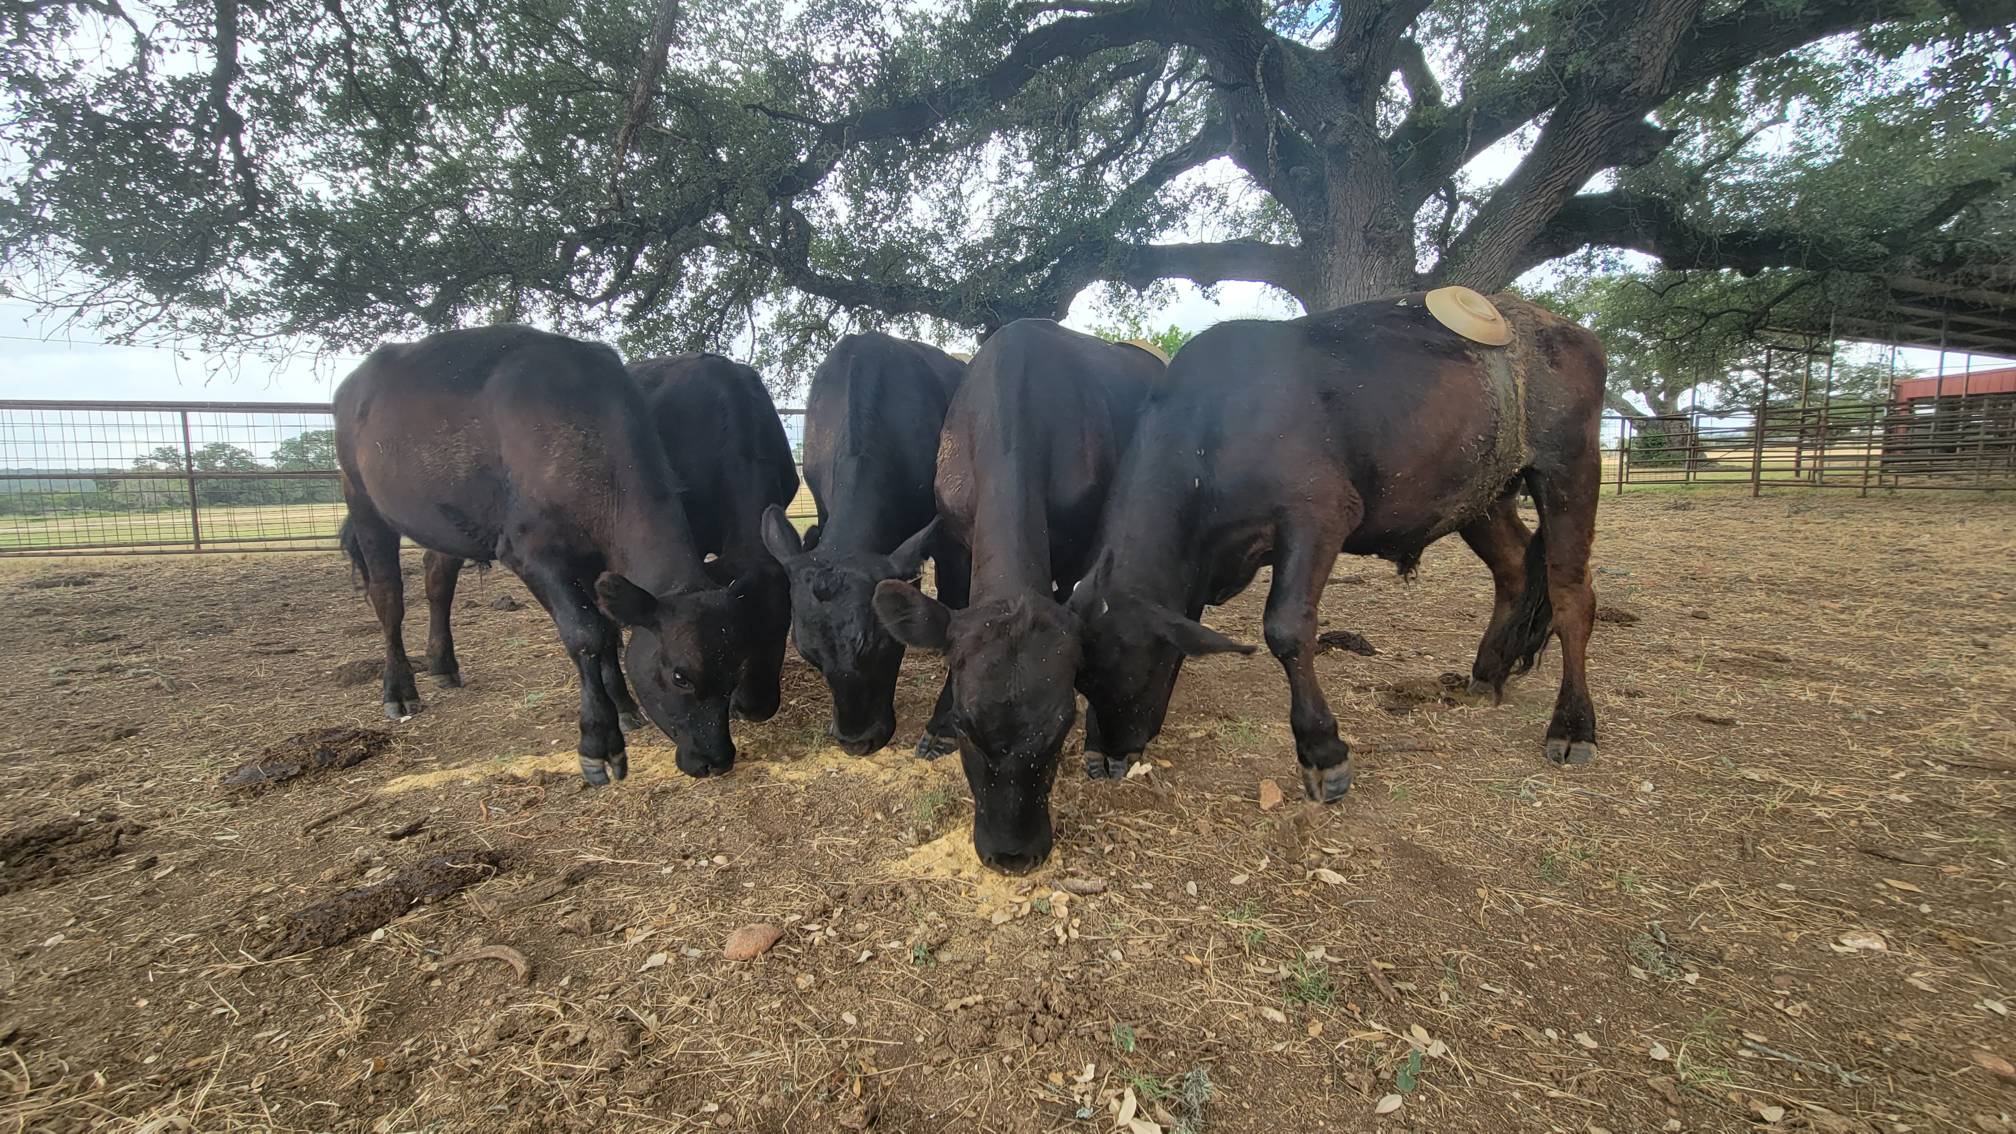 Five large black cattle graze on soy feed under a tree.